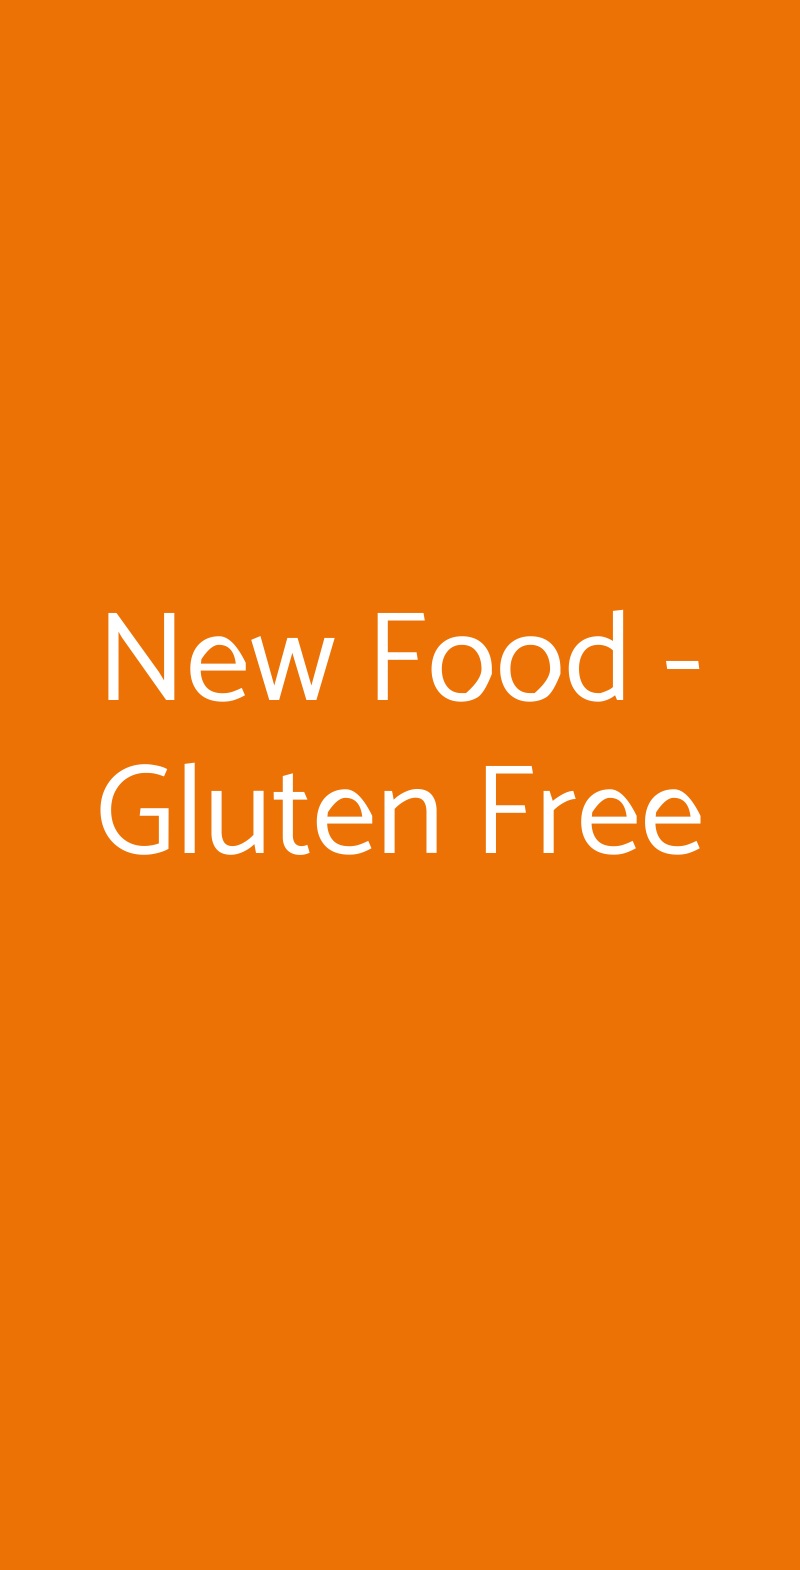 New Food - Gluten Free Roma menù 1 pagina